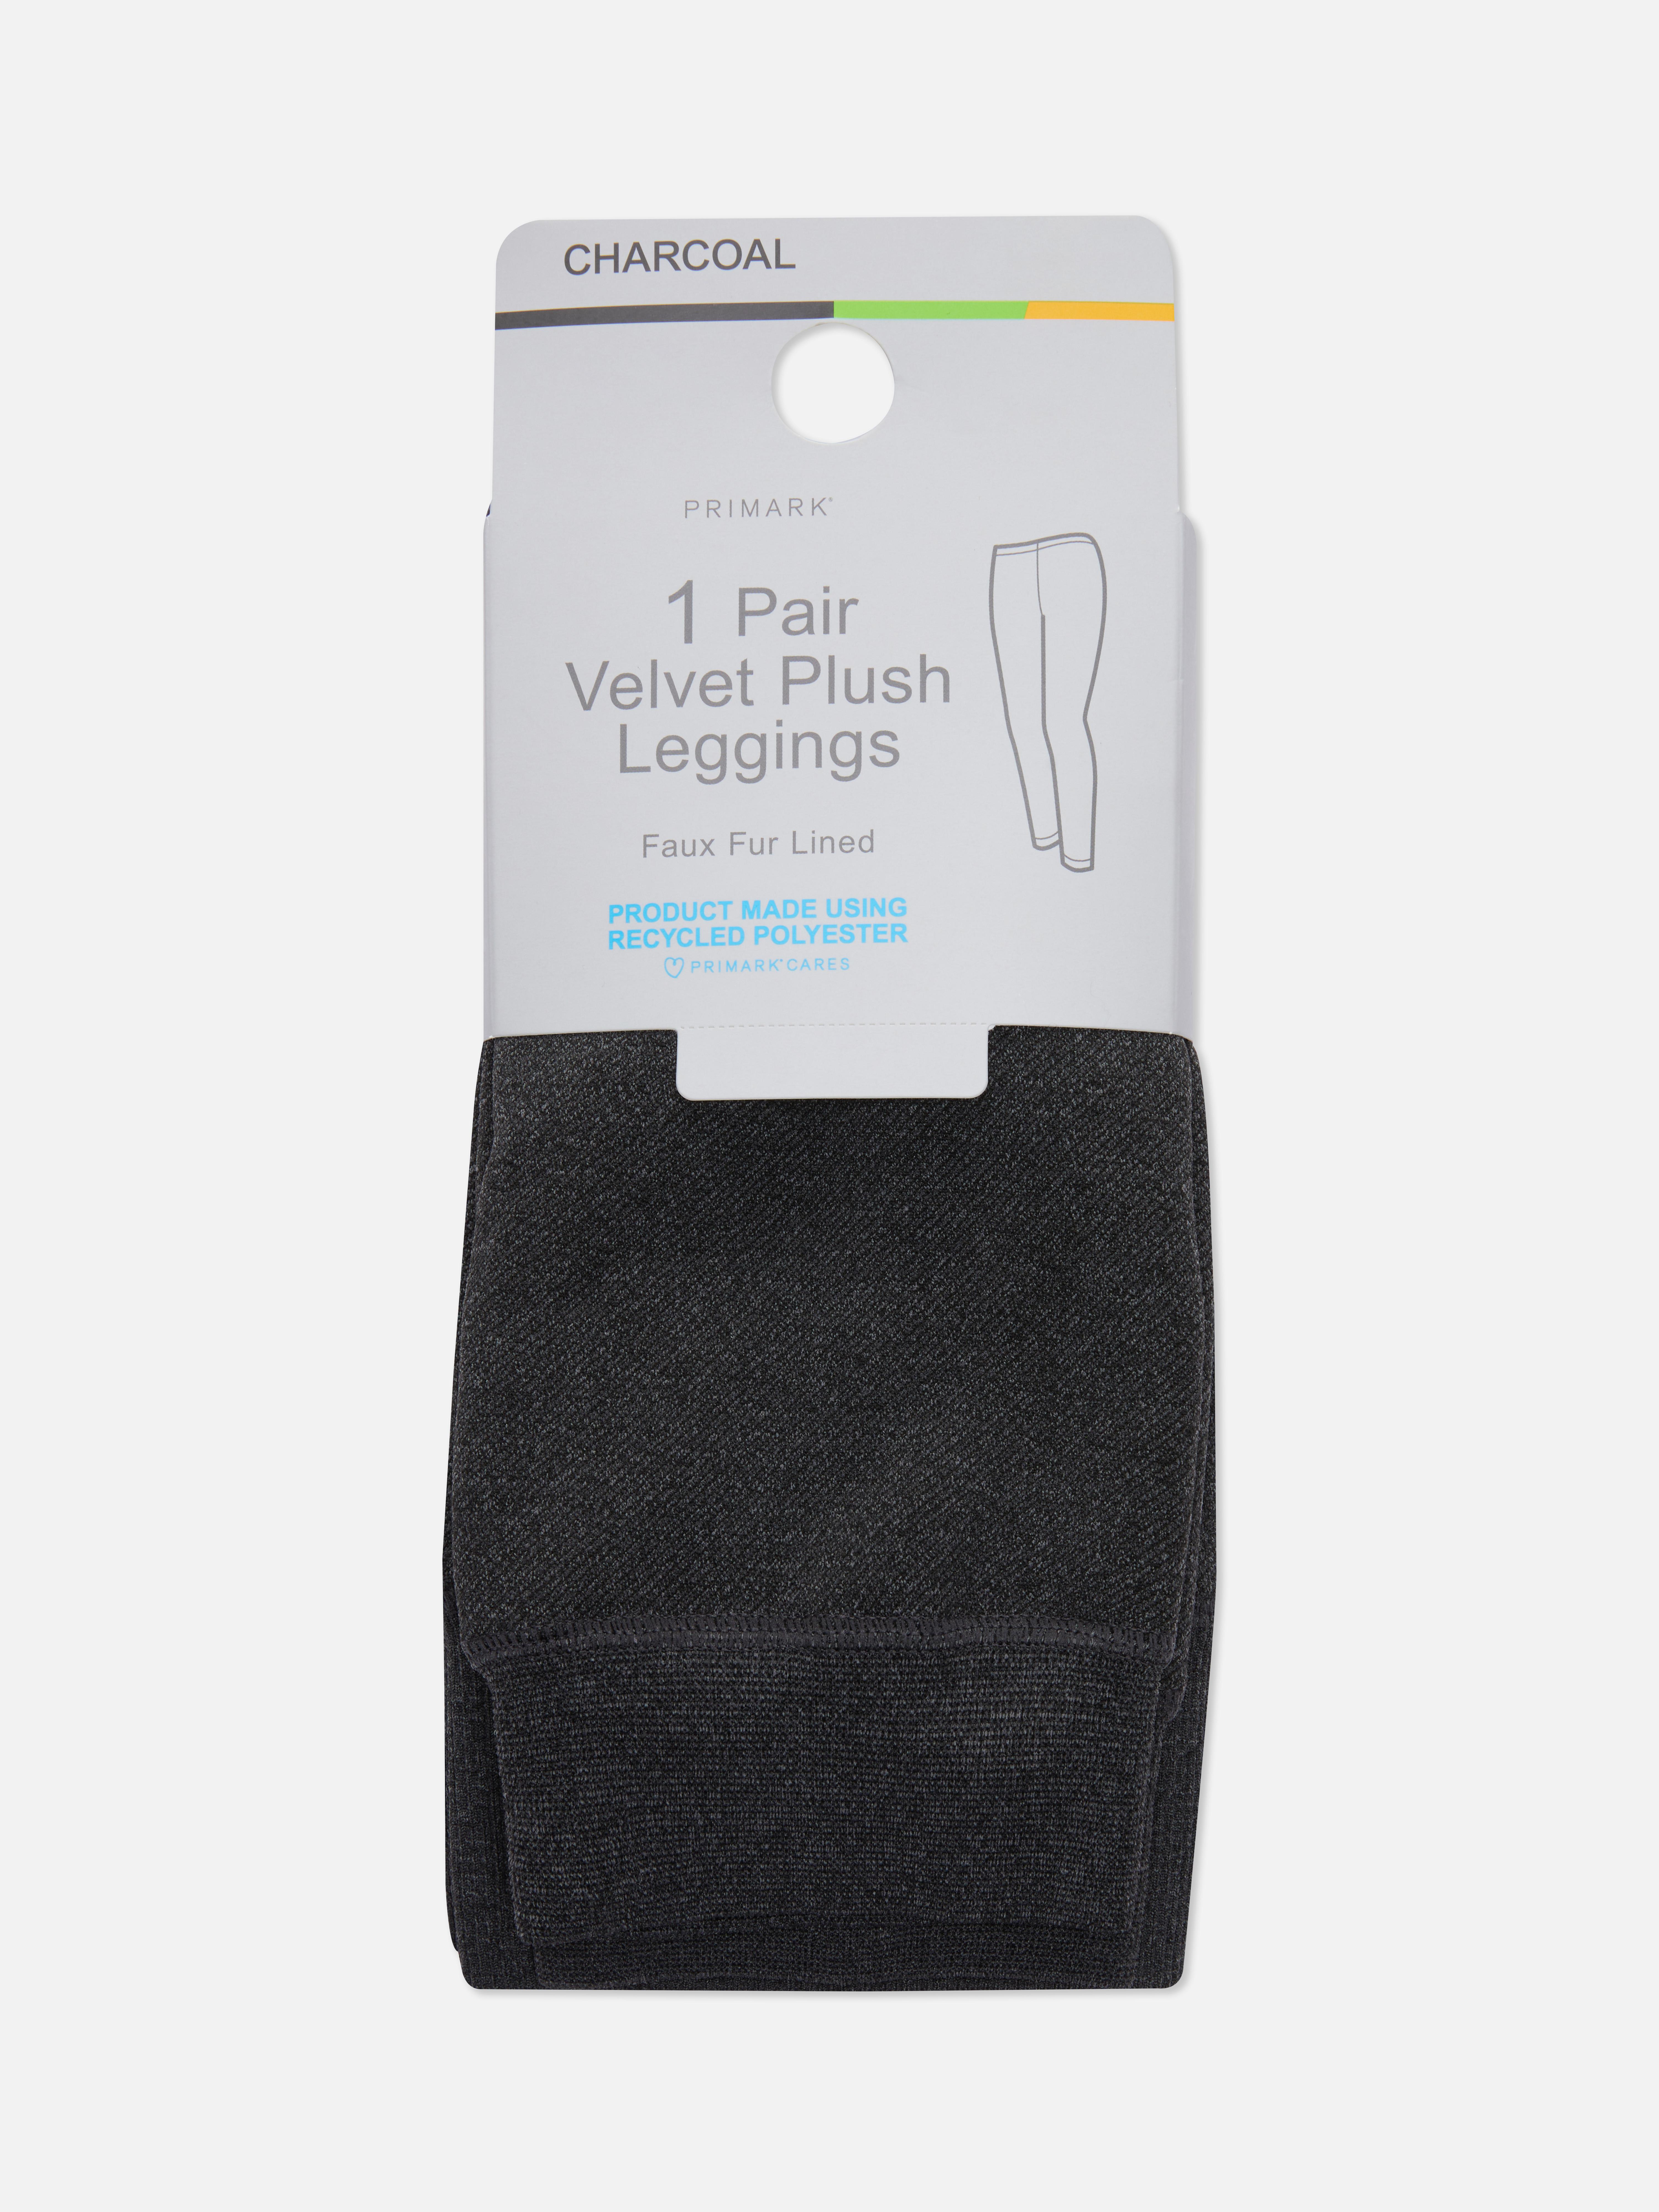 Plush Velvet | Women's Socks & Tights Women's Clothing | Our Women's Fashion Range | All Primark Products |